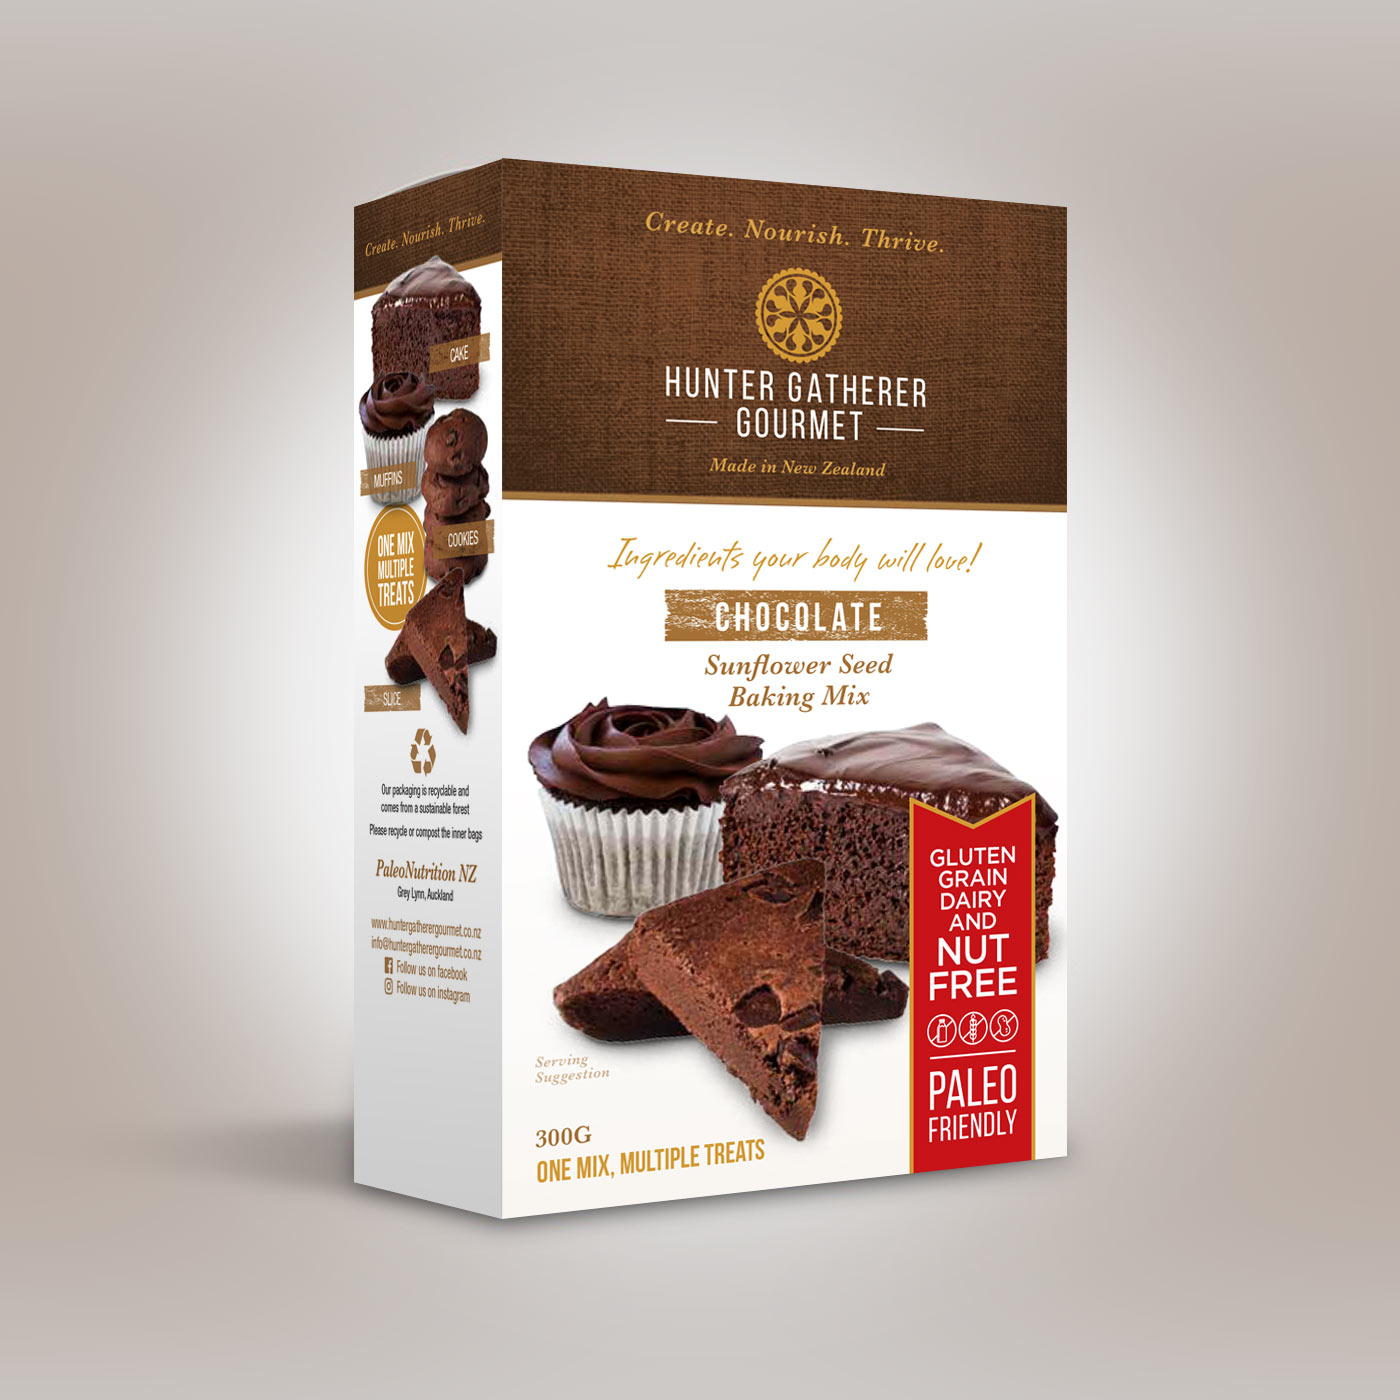 A box of Hunter Gatherer Gourmet brand Chocolate Sunflower Seed Baking Mix (300g).